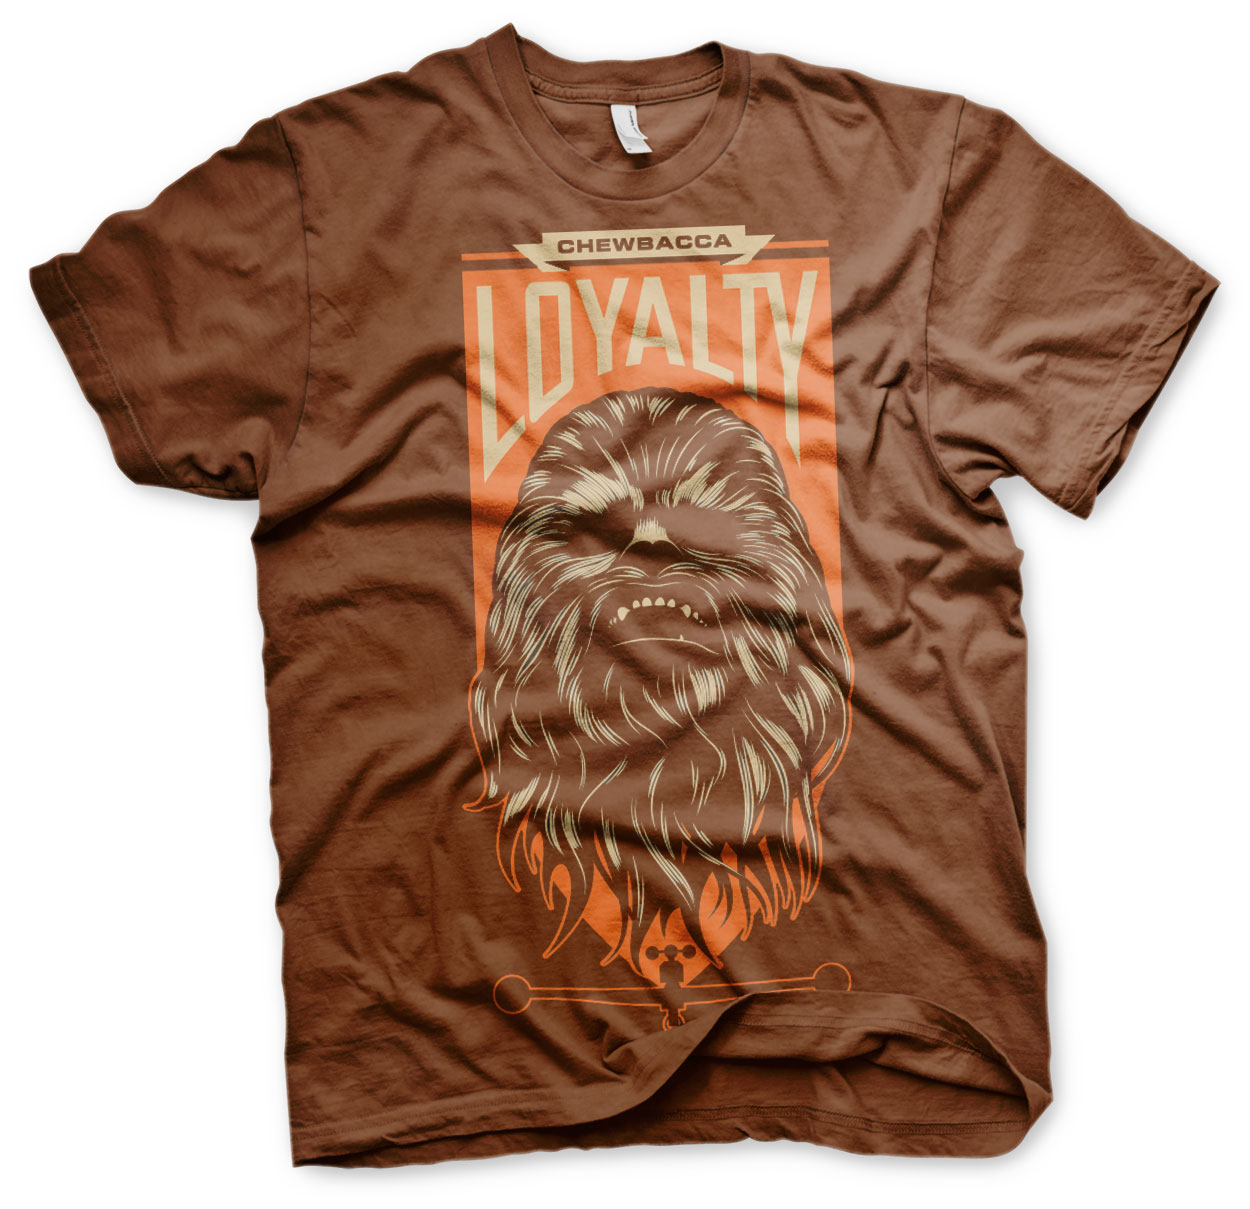 Chewbacca Loyalty T-Shirt